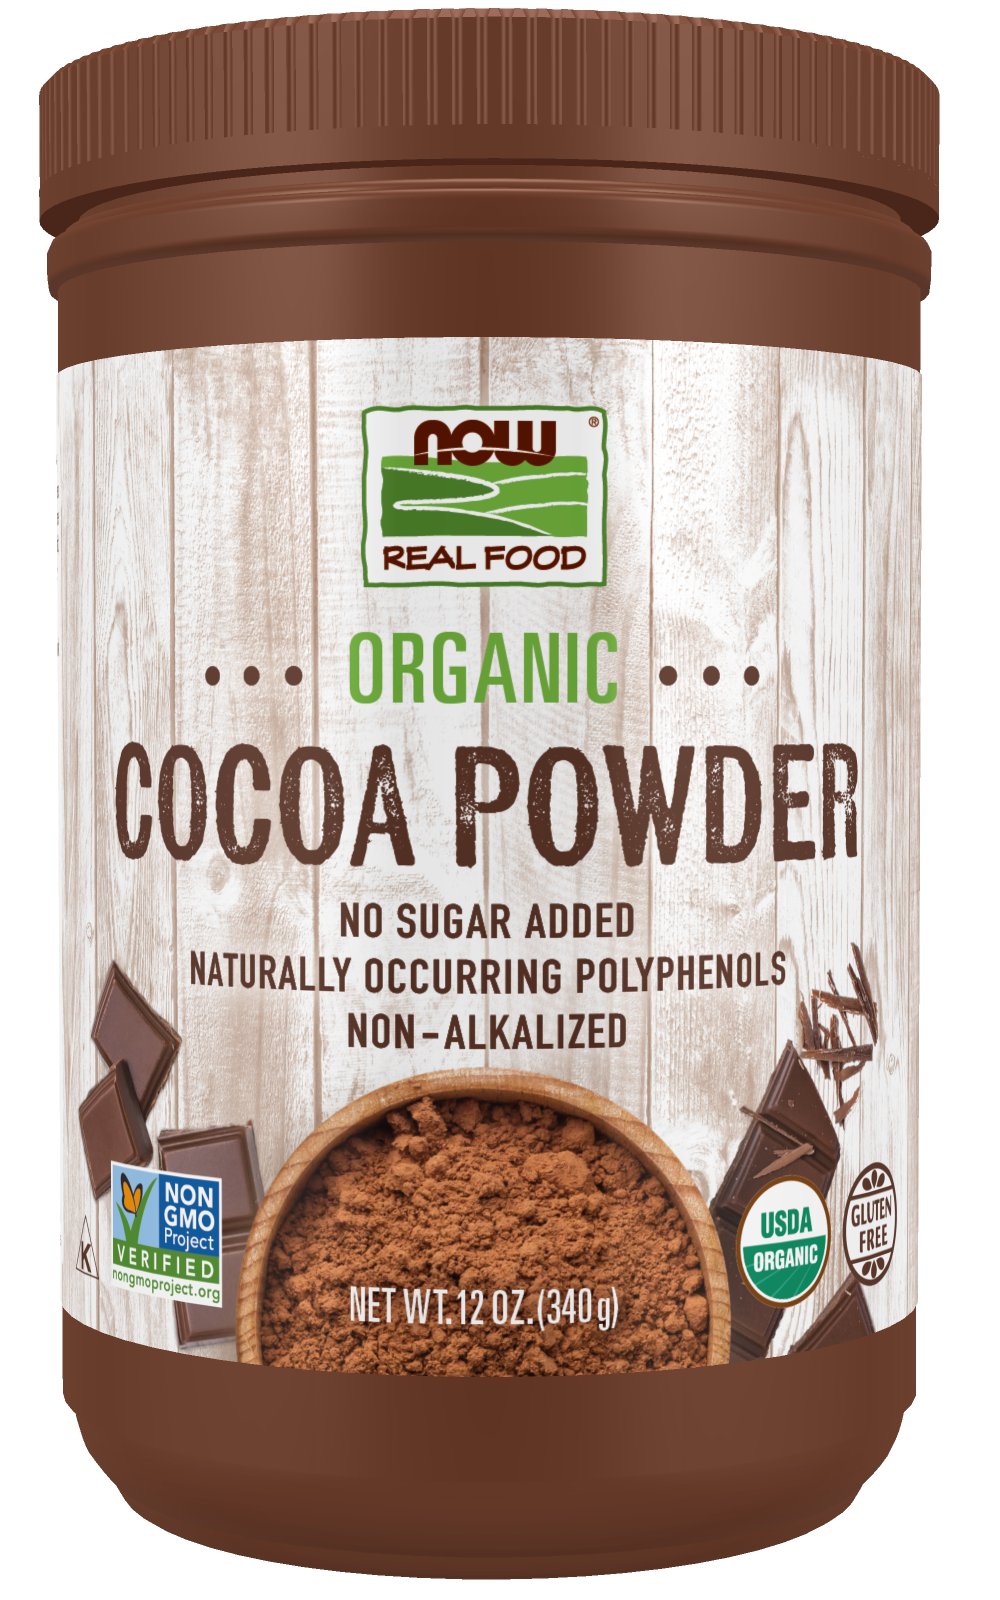 Cocoa Powder, Organic - 12 oz. Container Front